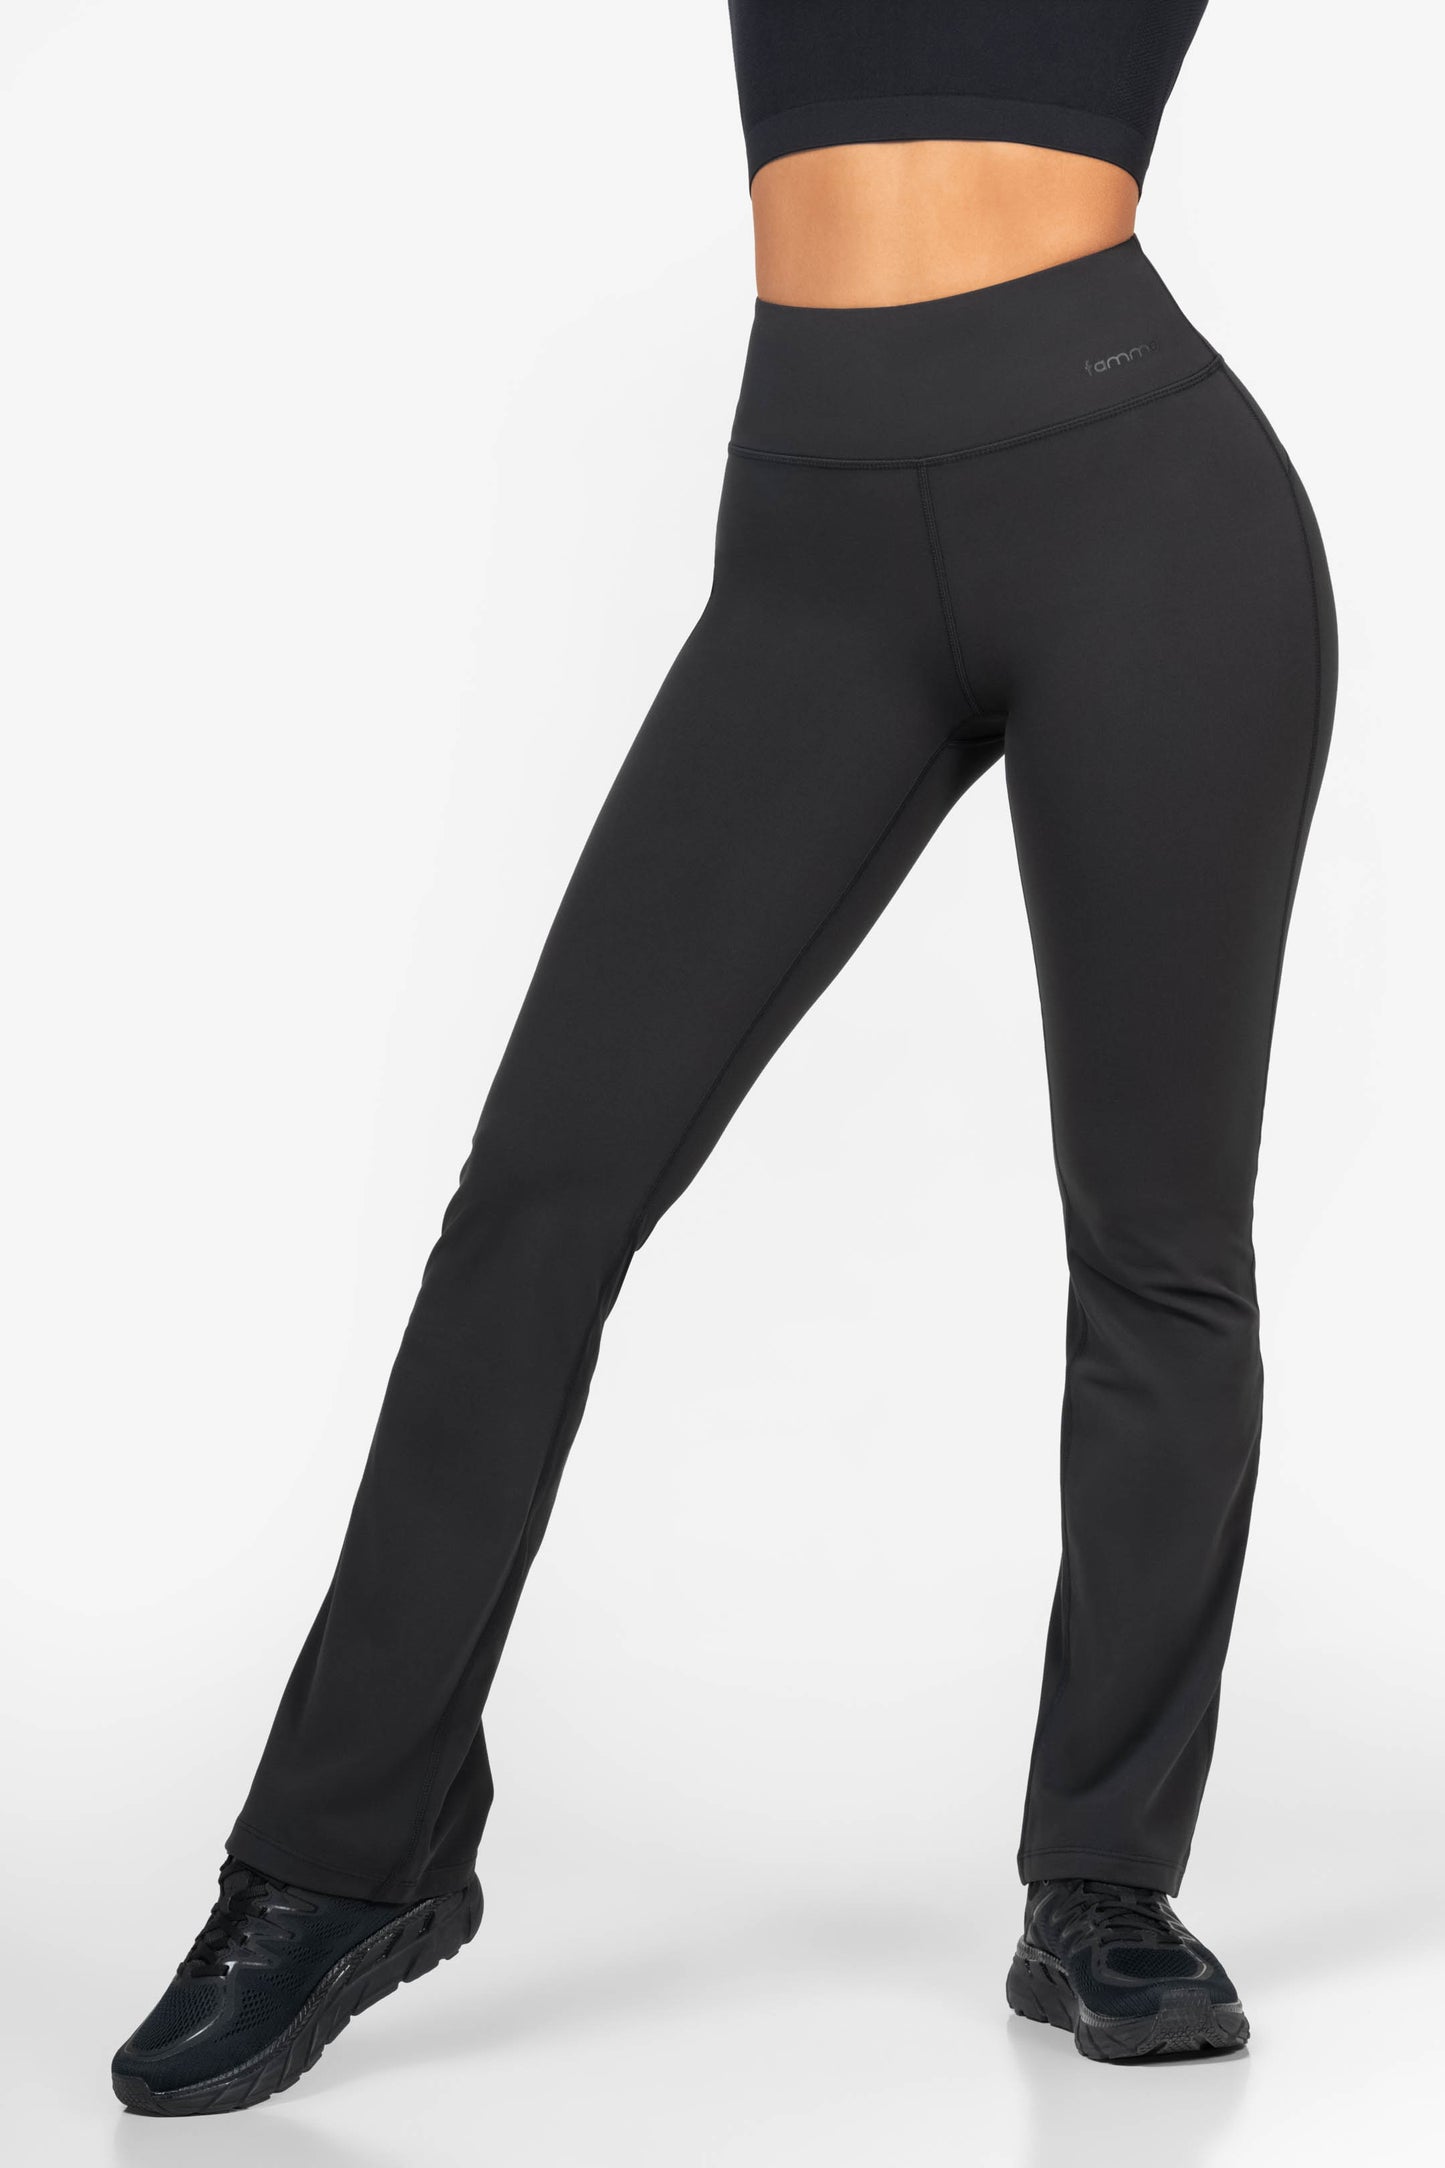 Black Yoga Pants - for dame - Famme - Pants